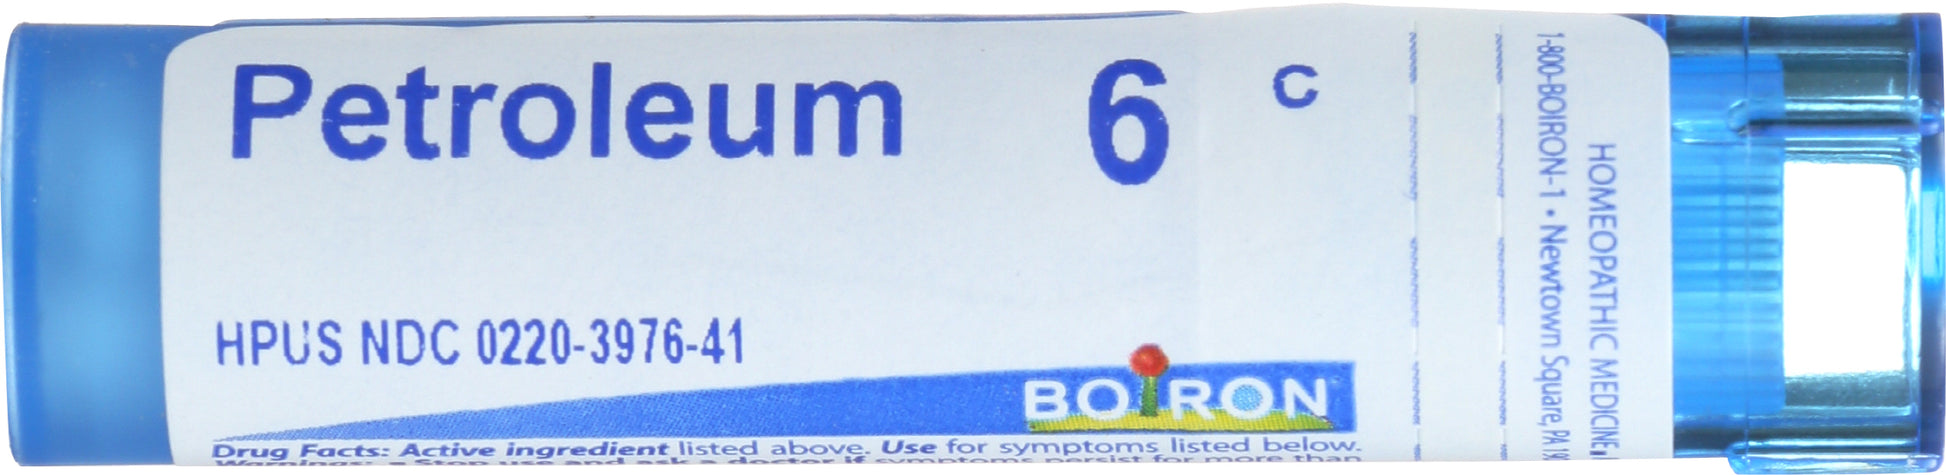 Boiron Petroleum 6c